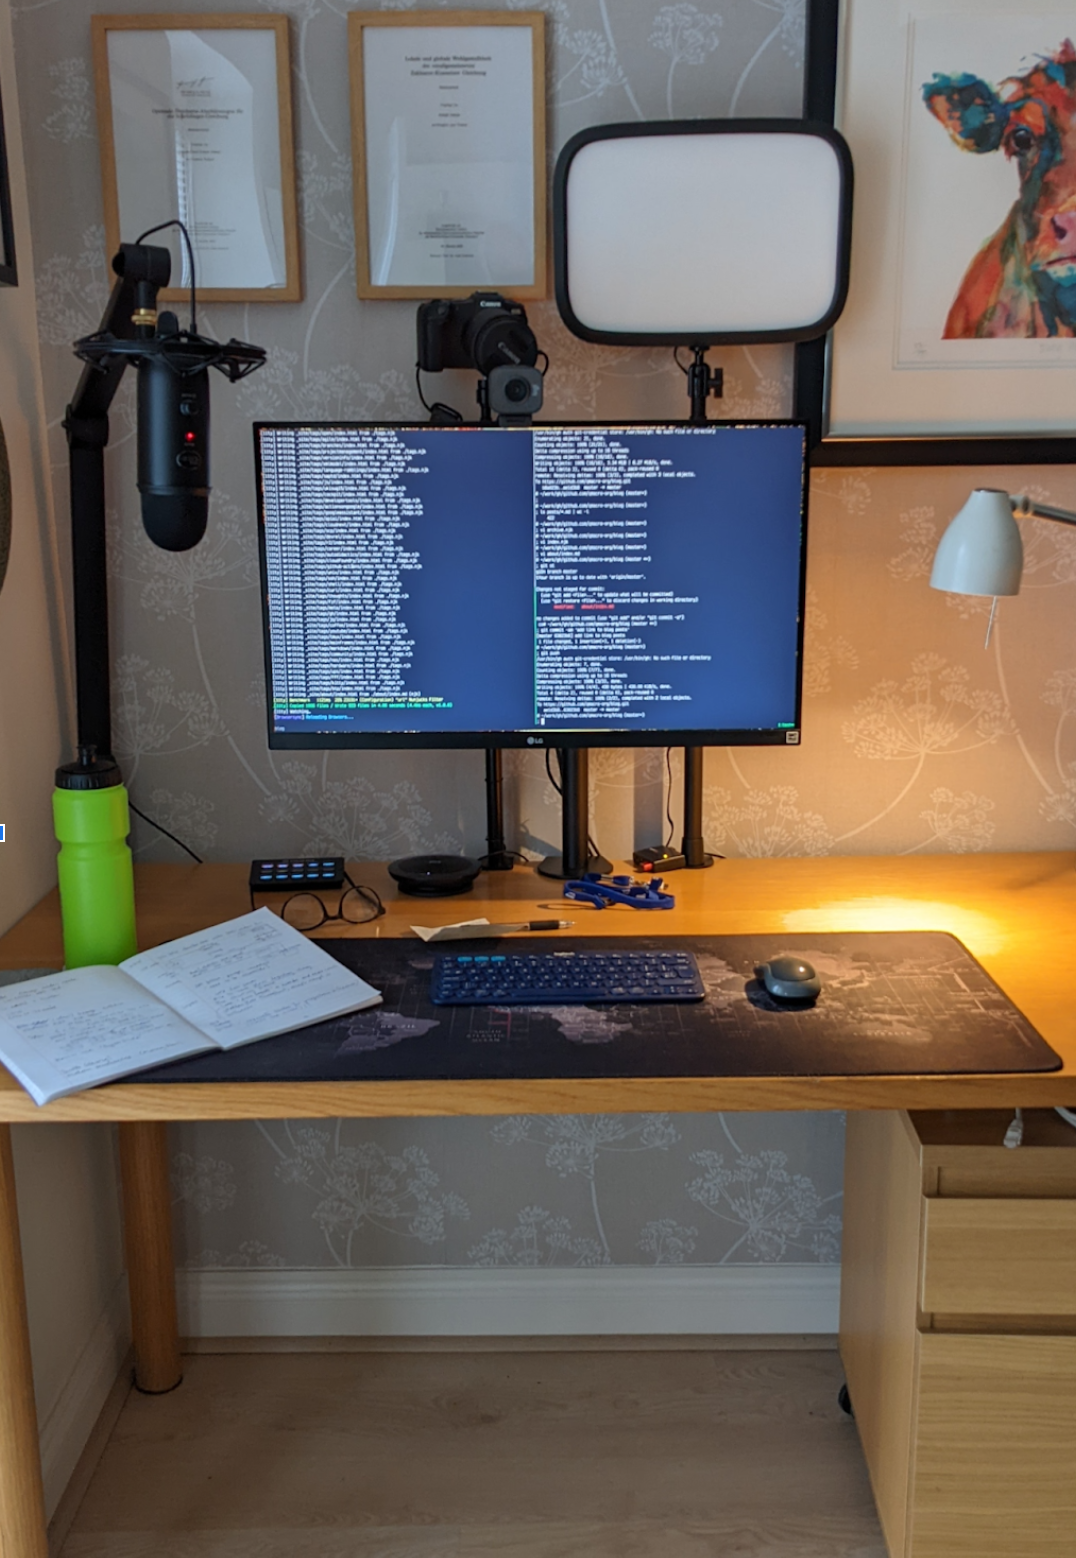 My desk setup at home